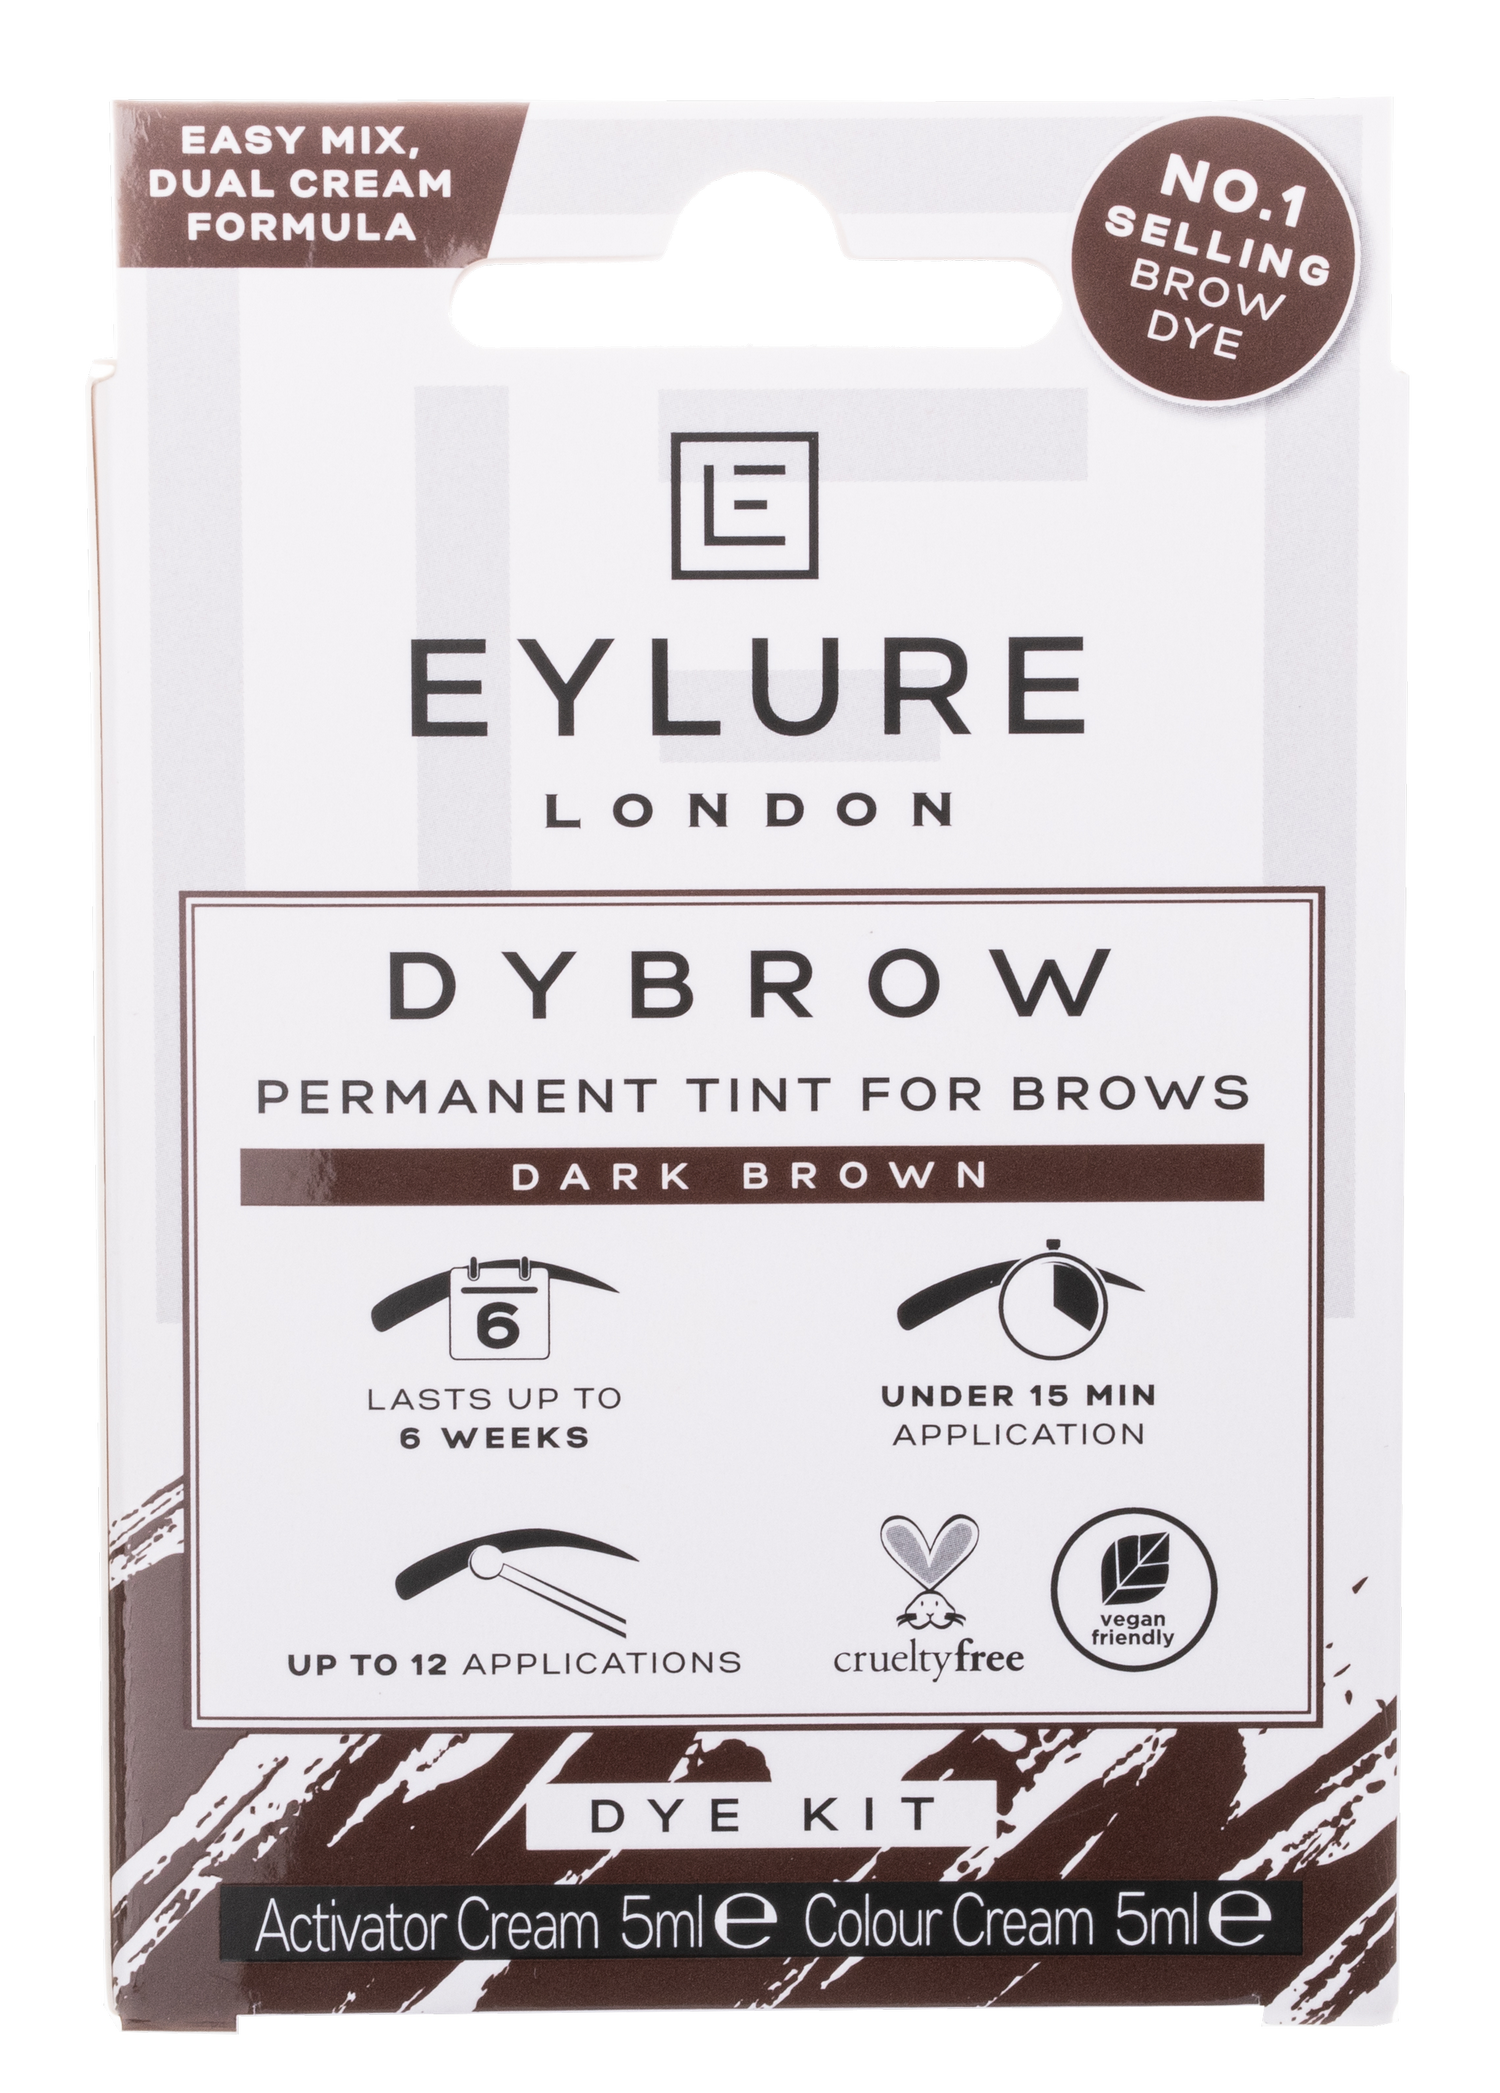 Eylure Eyebrow Dybrow Kit Dark Brown 10ml